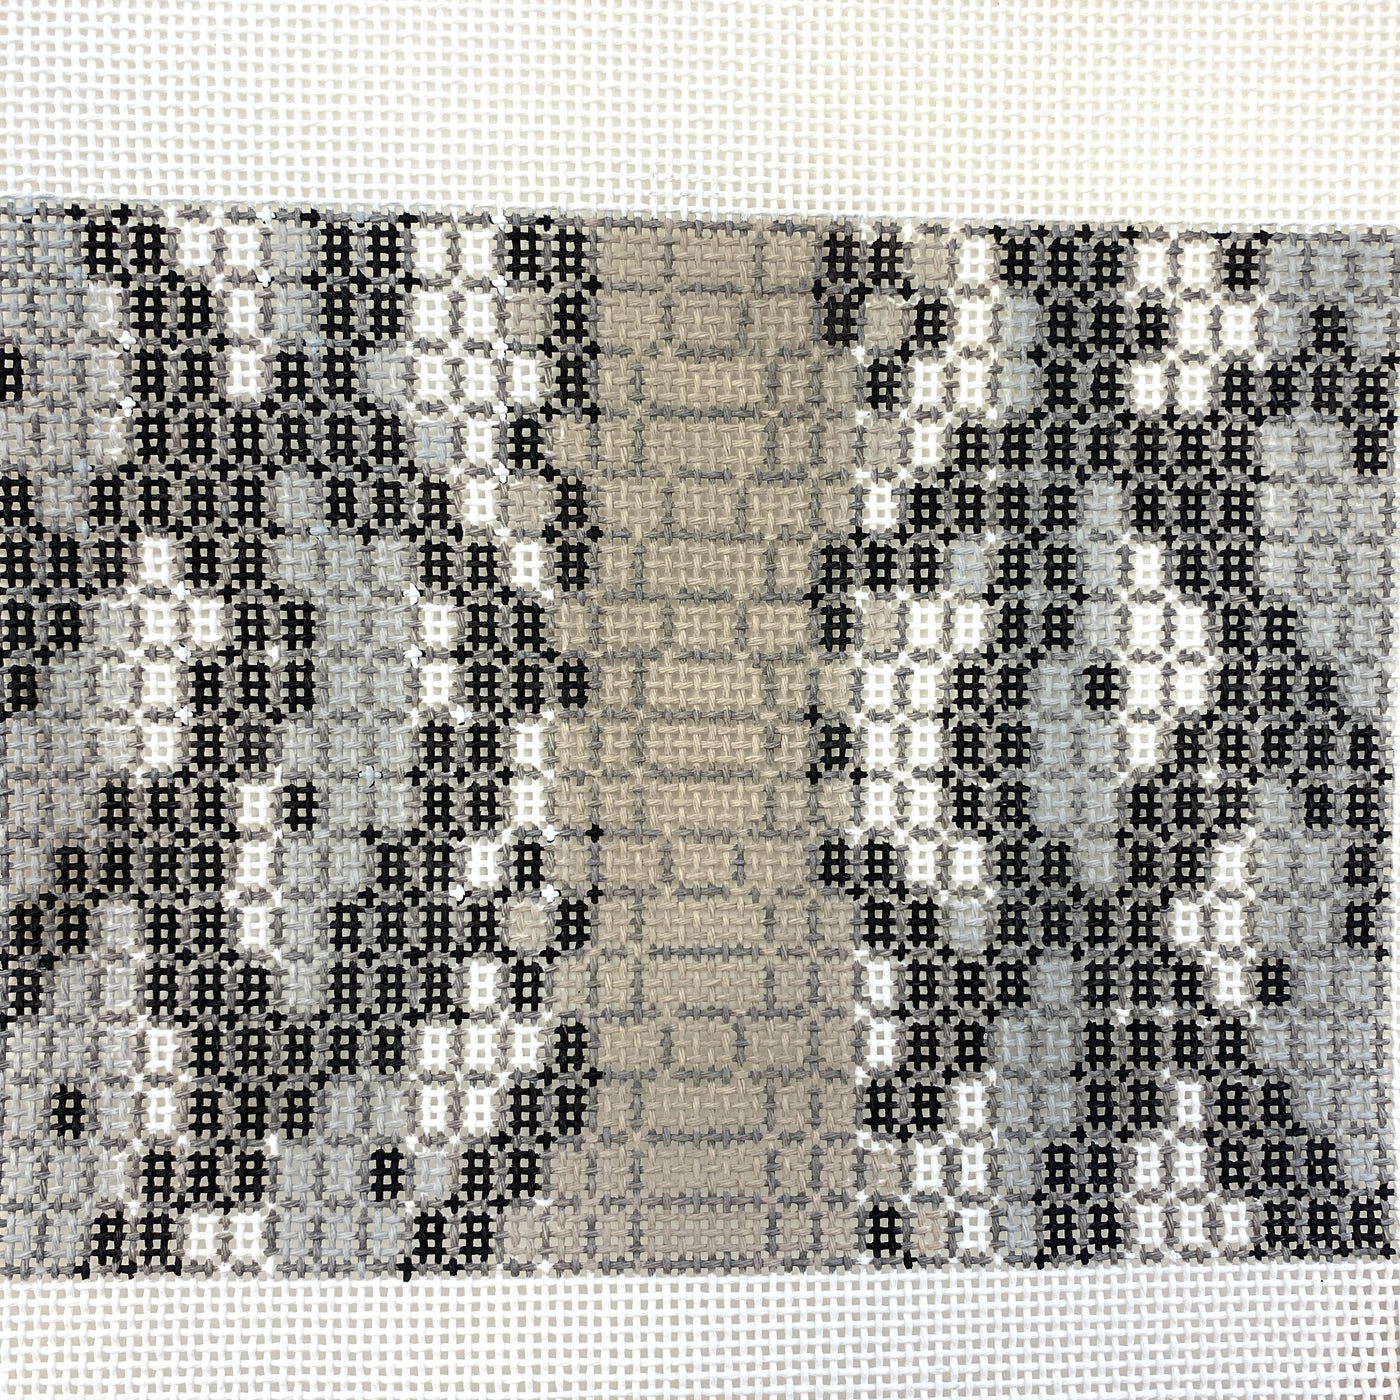 Snakeskin Mini Flat Clutch - Grey Needlepoint Canvas